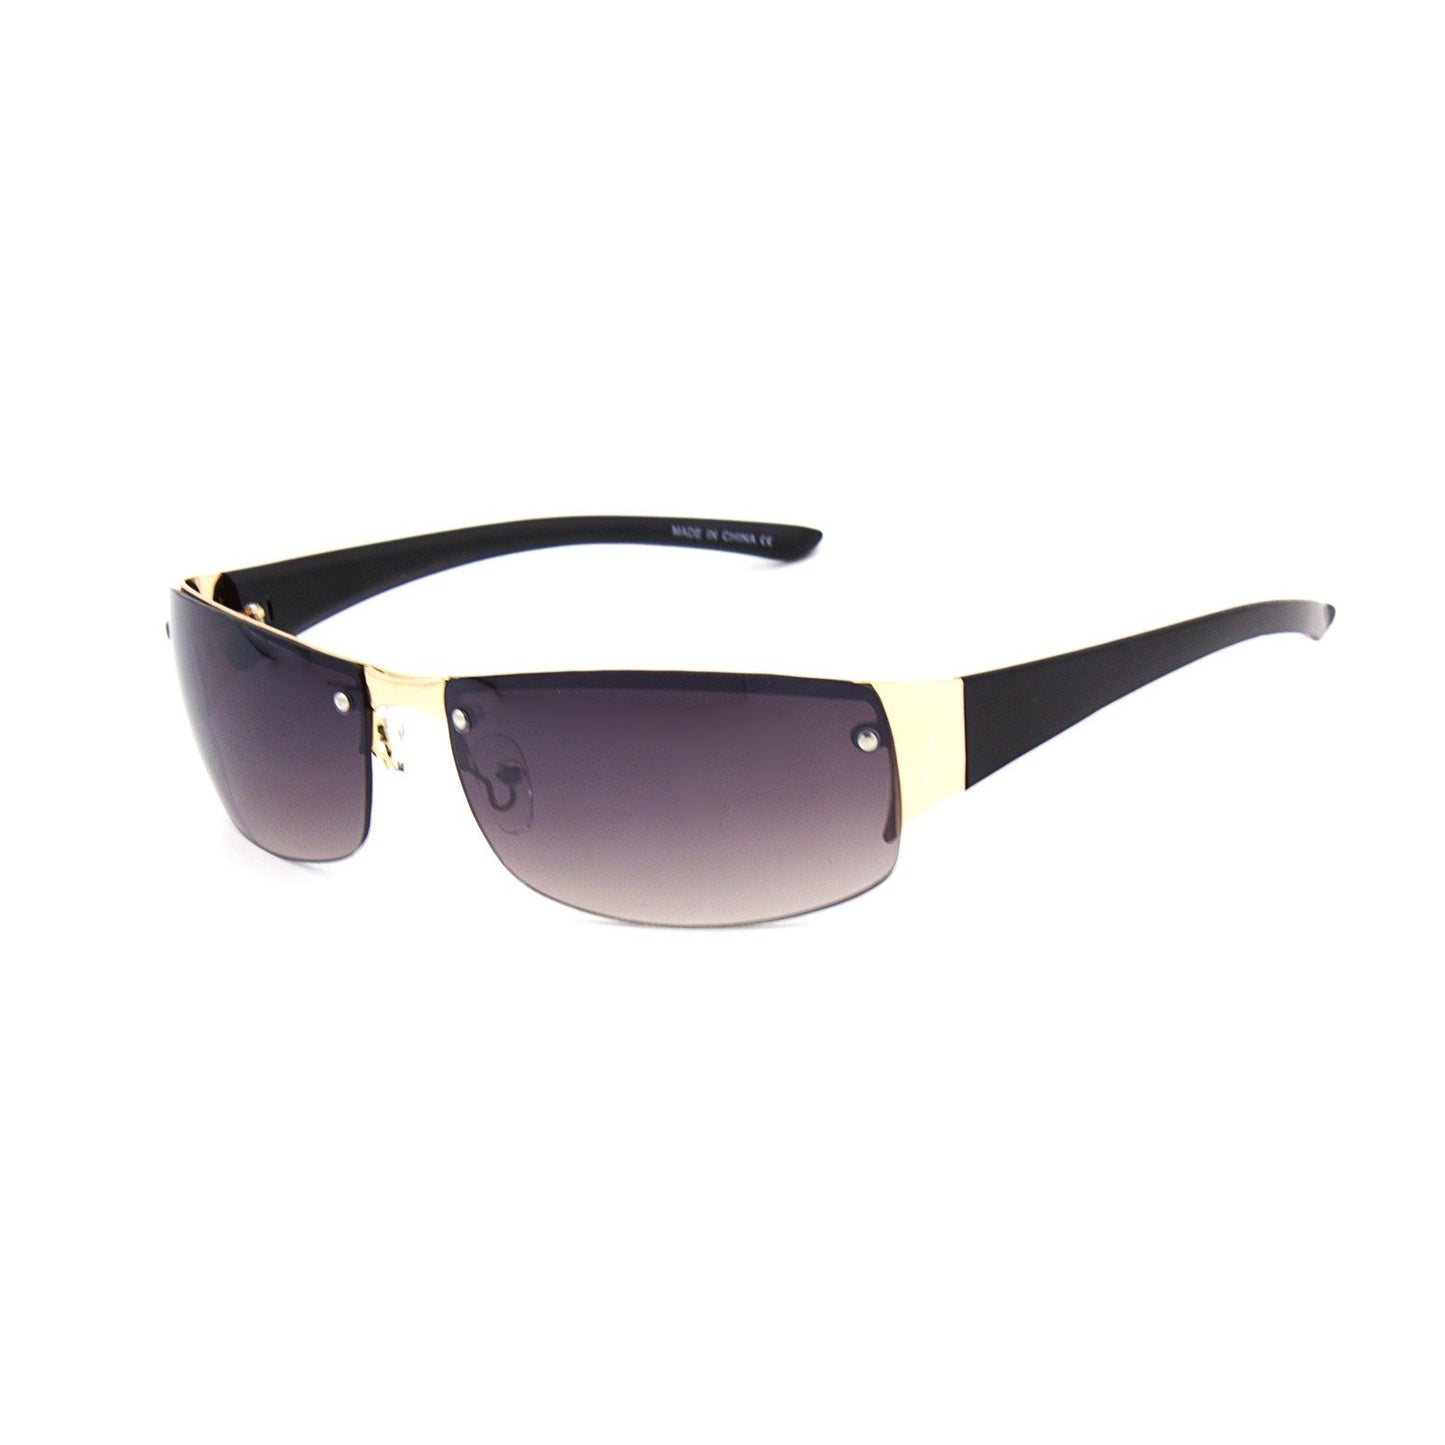 "High Lift" Rimless Sunglasses - Weekend Shade Sunglasses